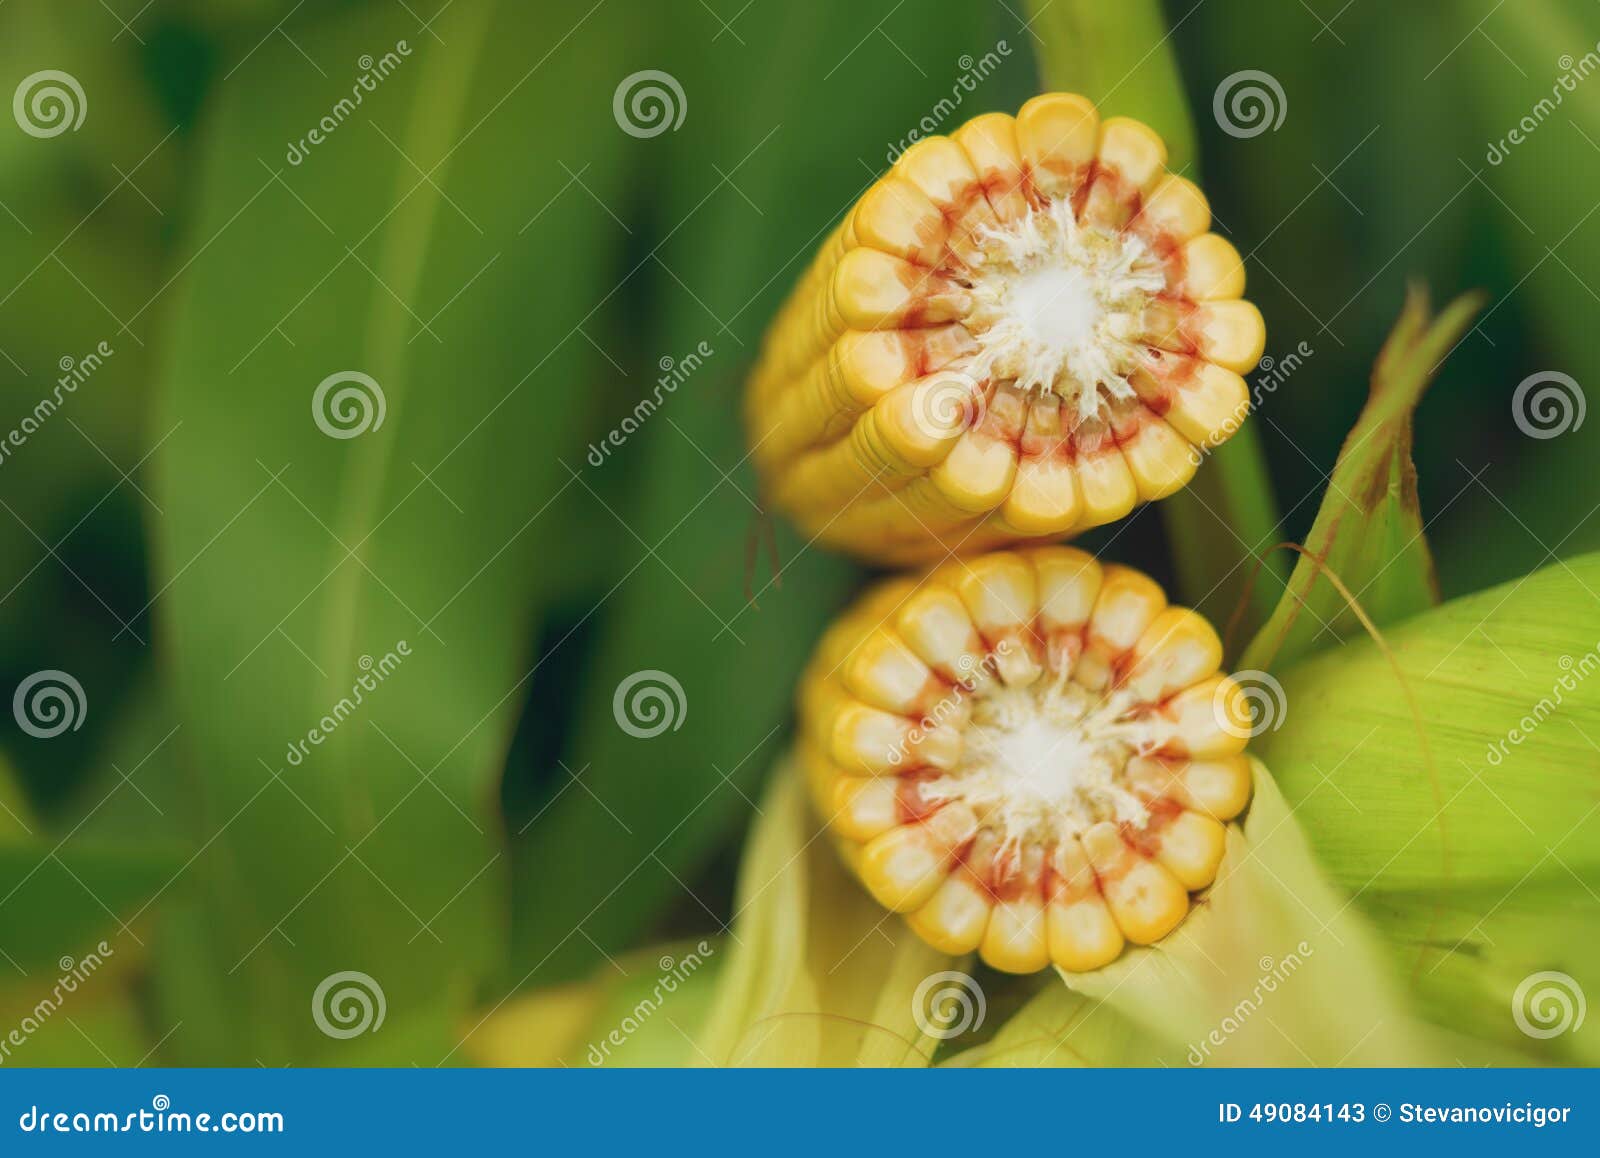 corn maize cob on stalk in field